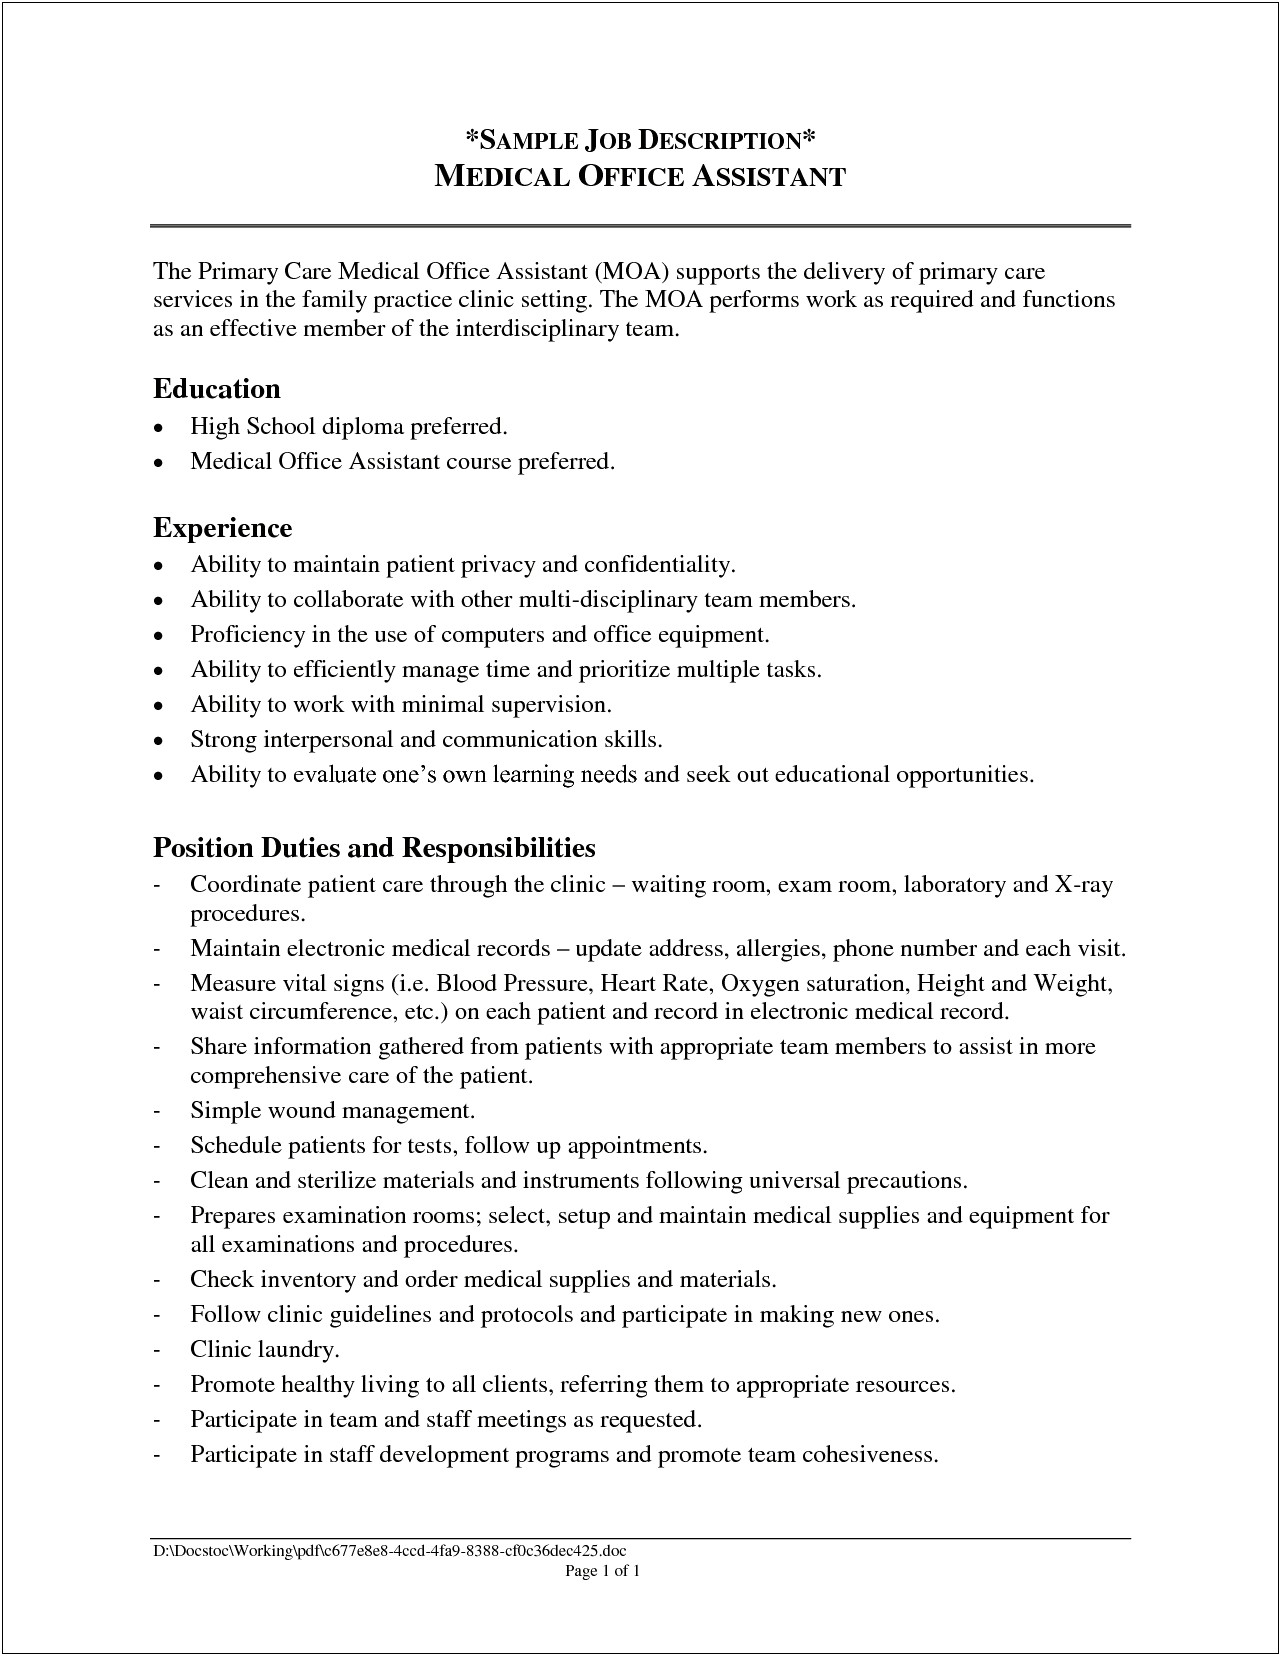 Administrative Specialist Job Description Resume